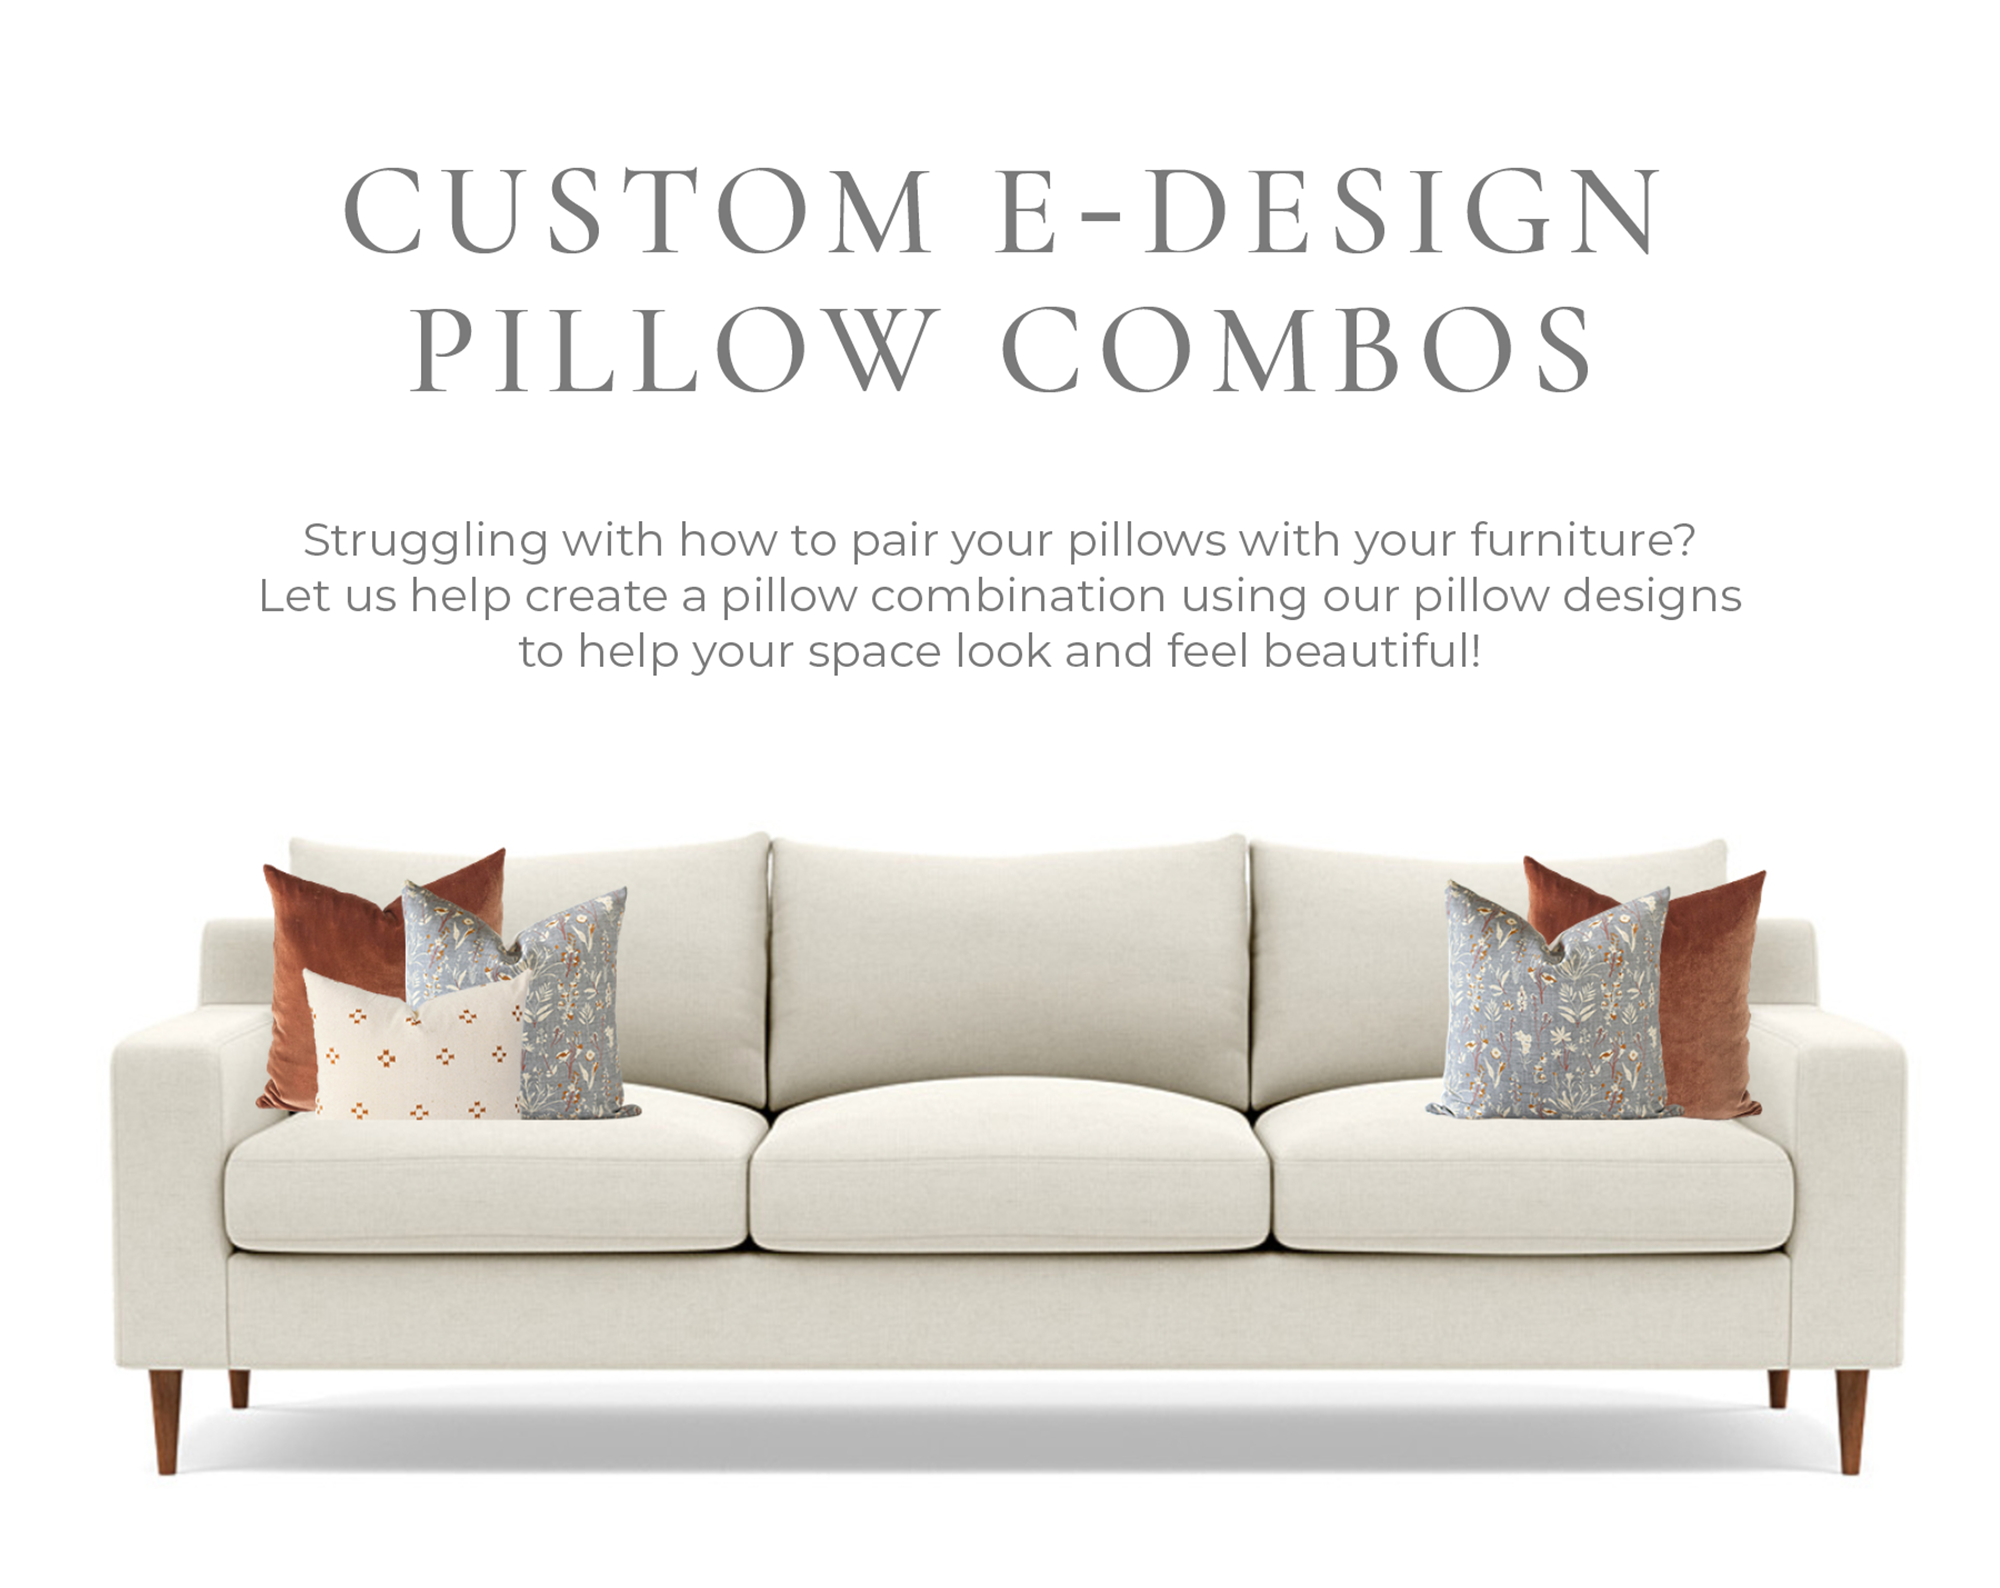 Cover Story: Building a Custom Cushion